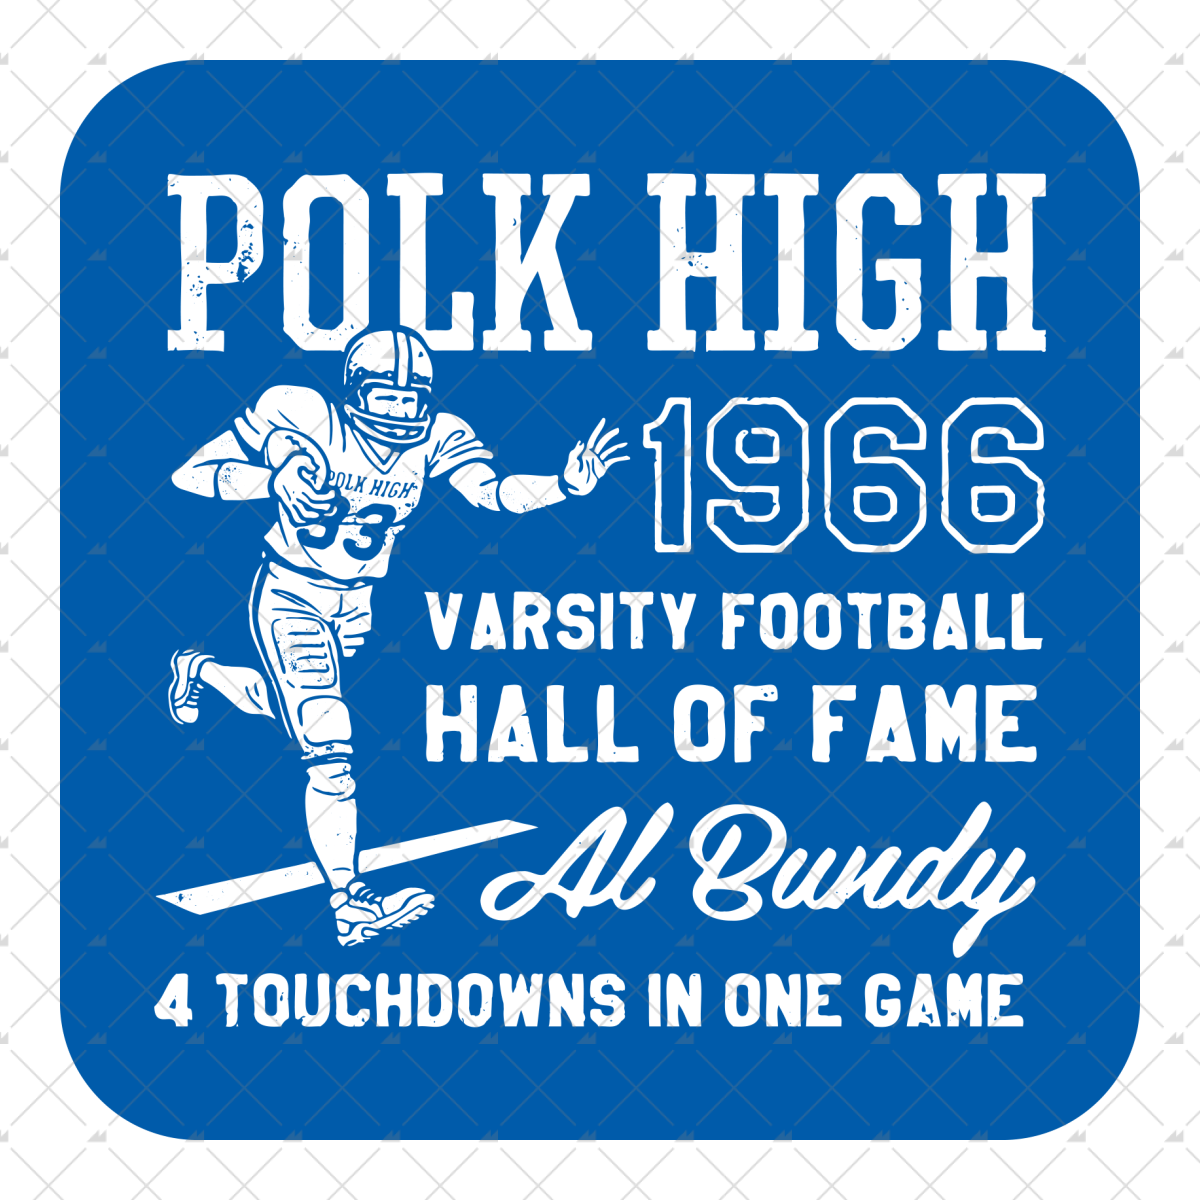 Al Bundy - 1966 Polk High Varsity Football Hall of Fame - Sticker